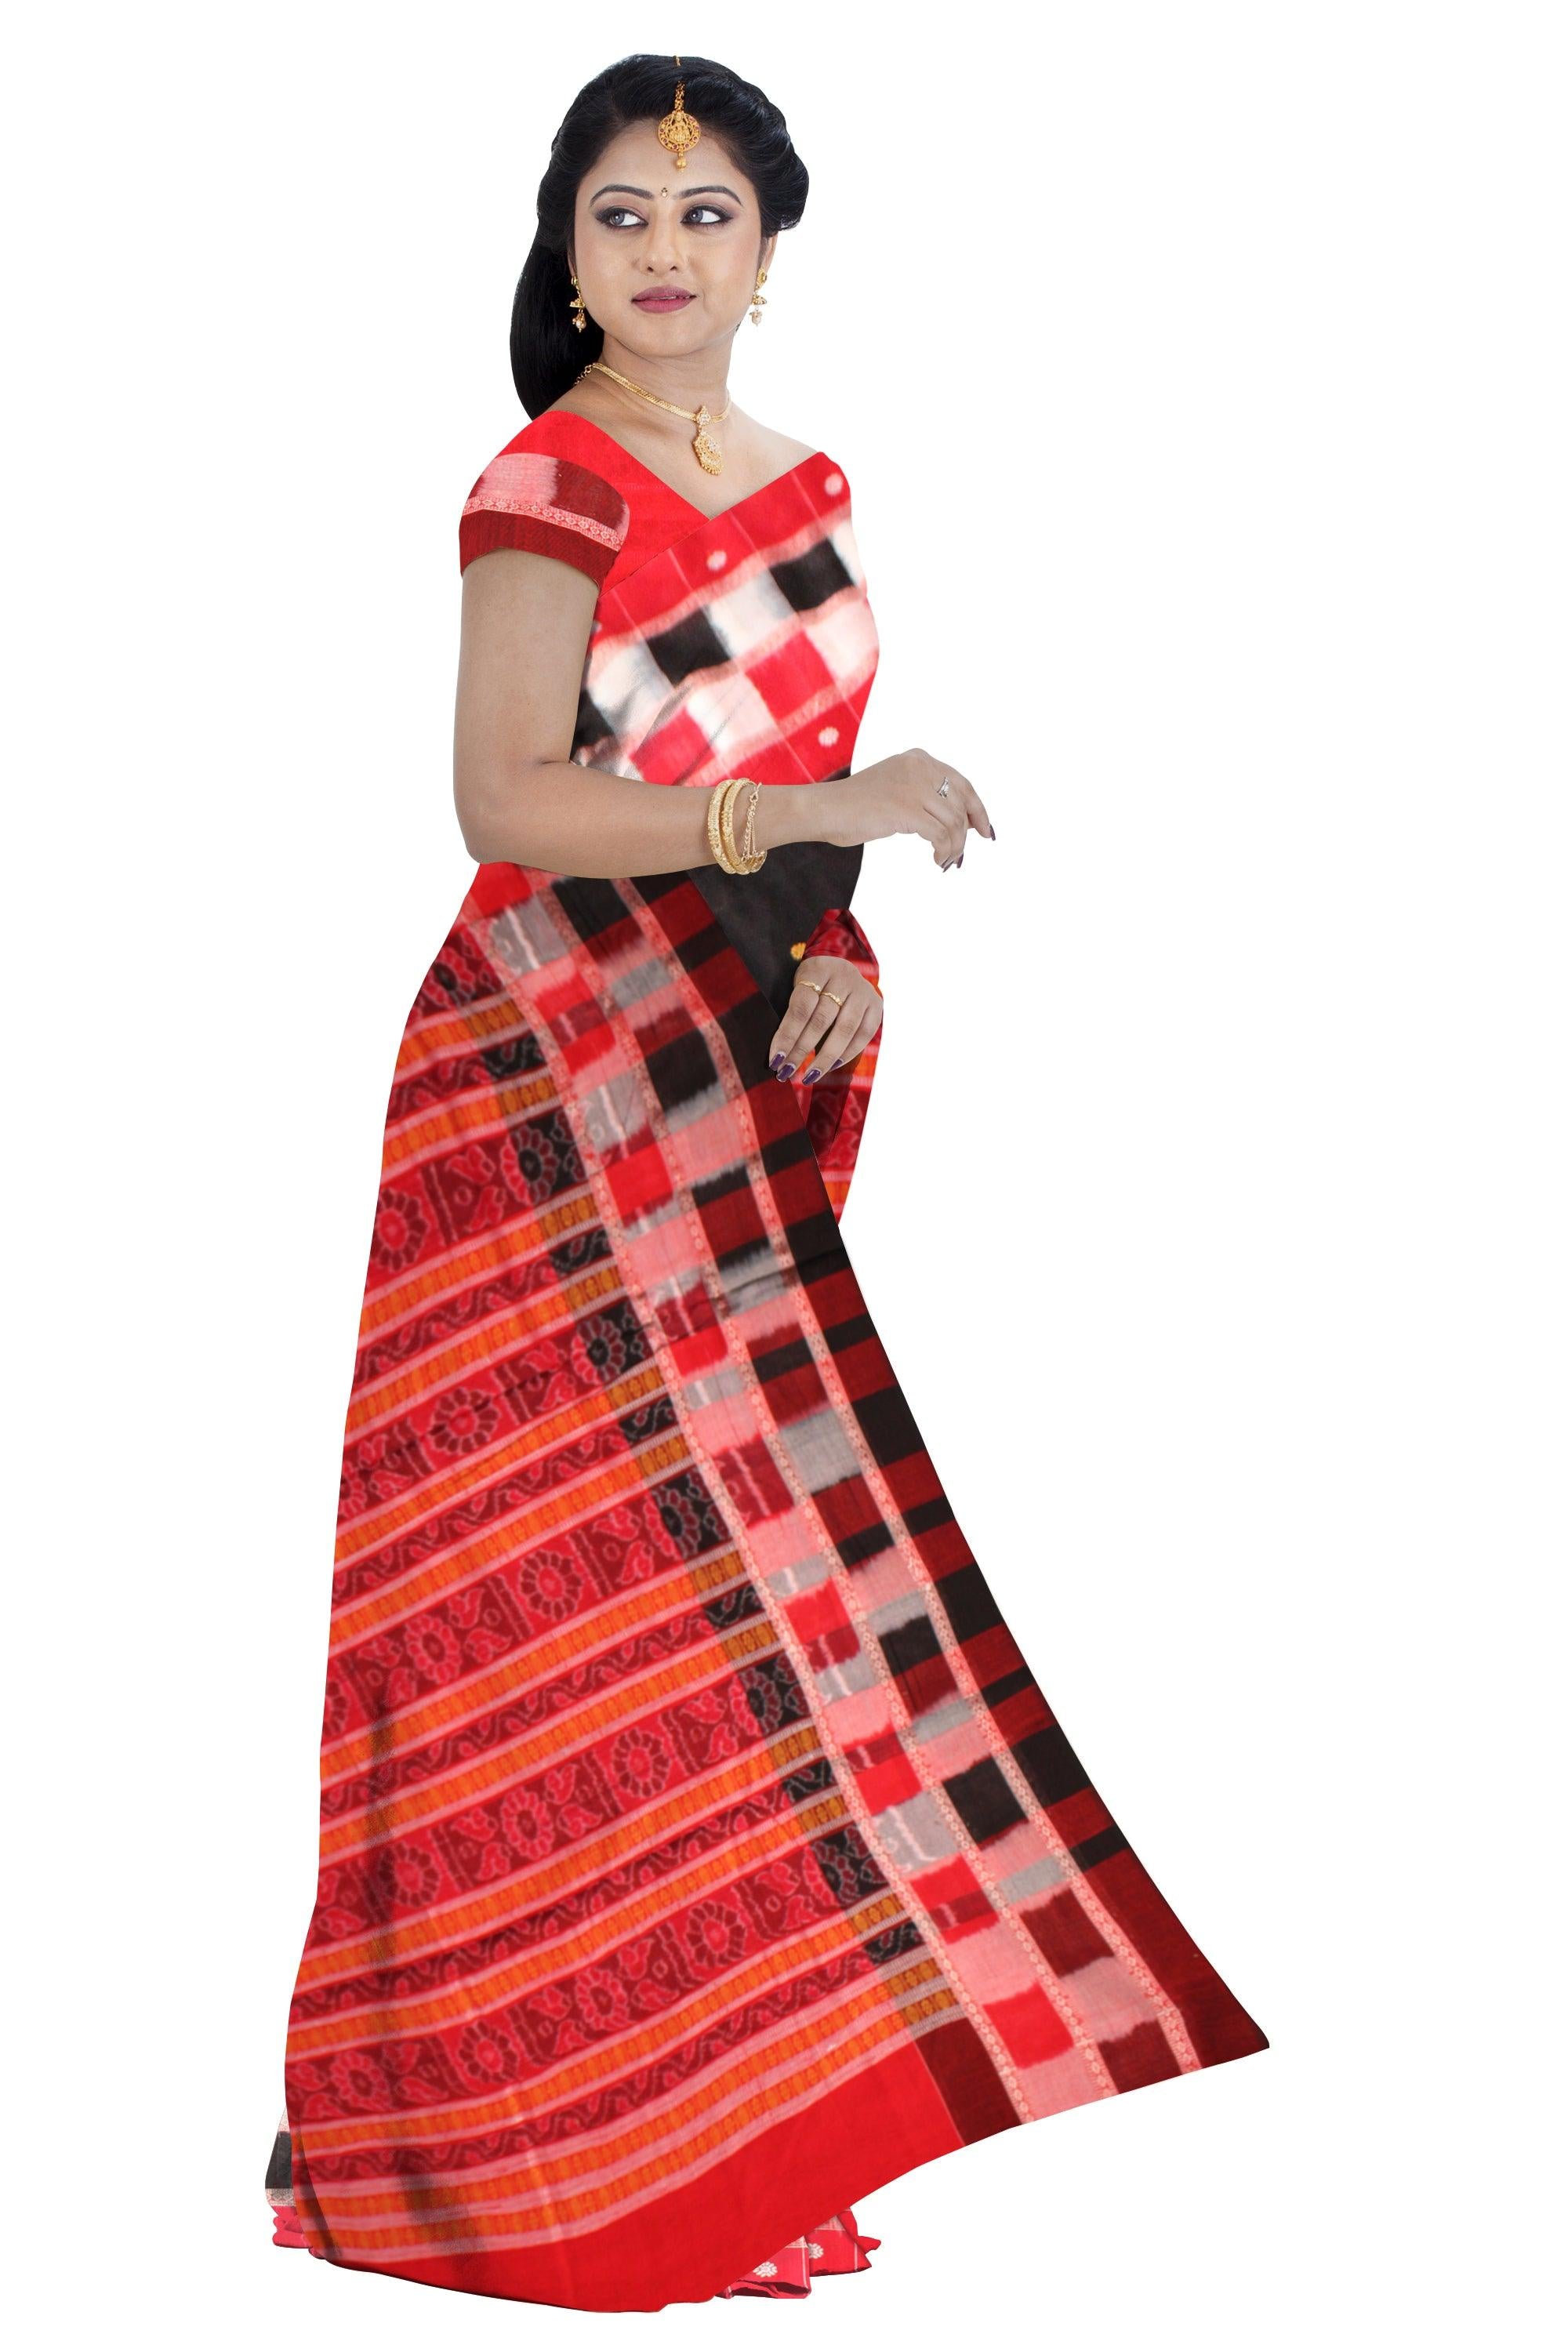 Sambalpuri Saree in Black color body and Red and White Pasapali Border with blouse piece. - Koshali Arts & Crafts Enterprise